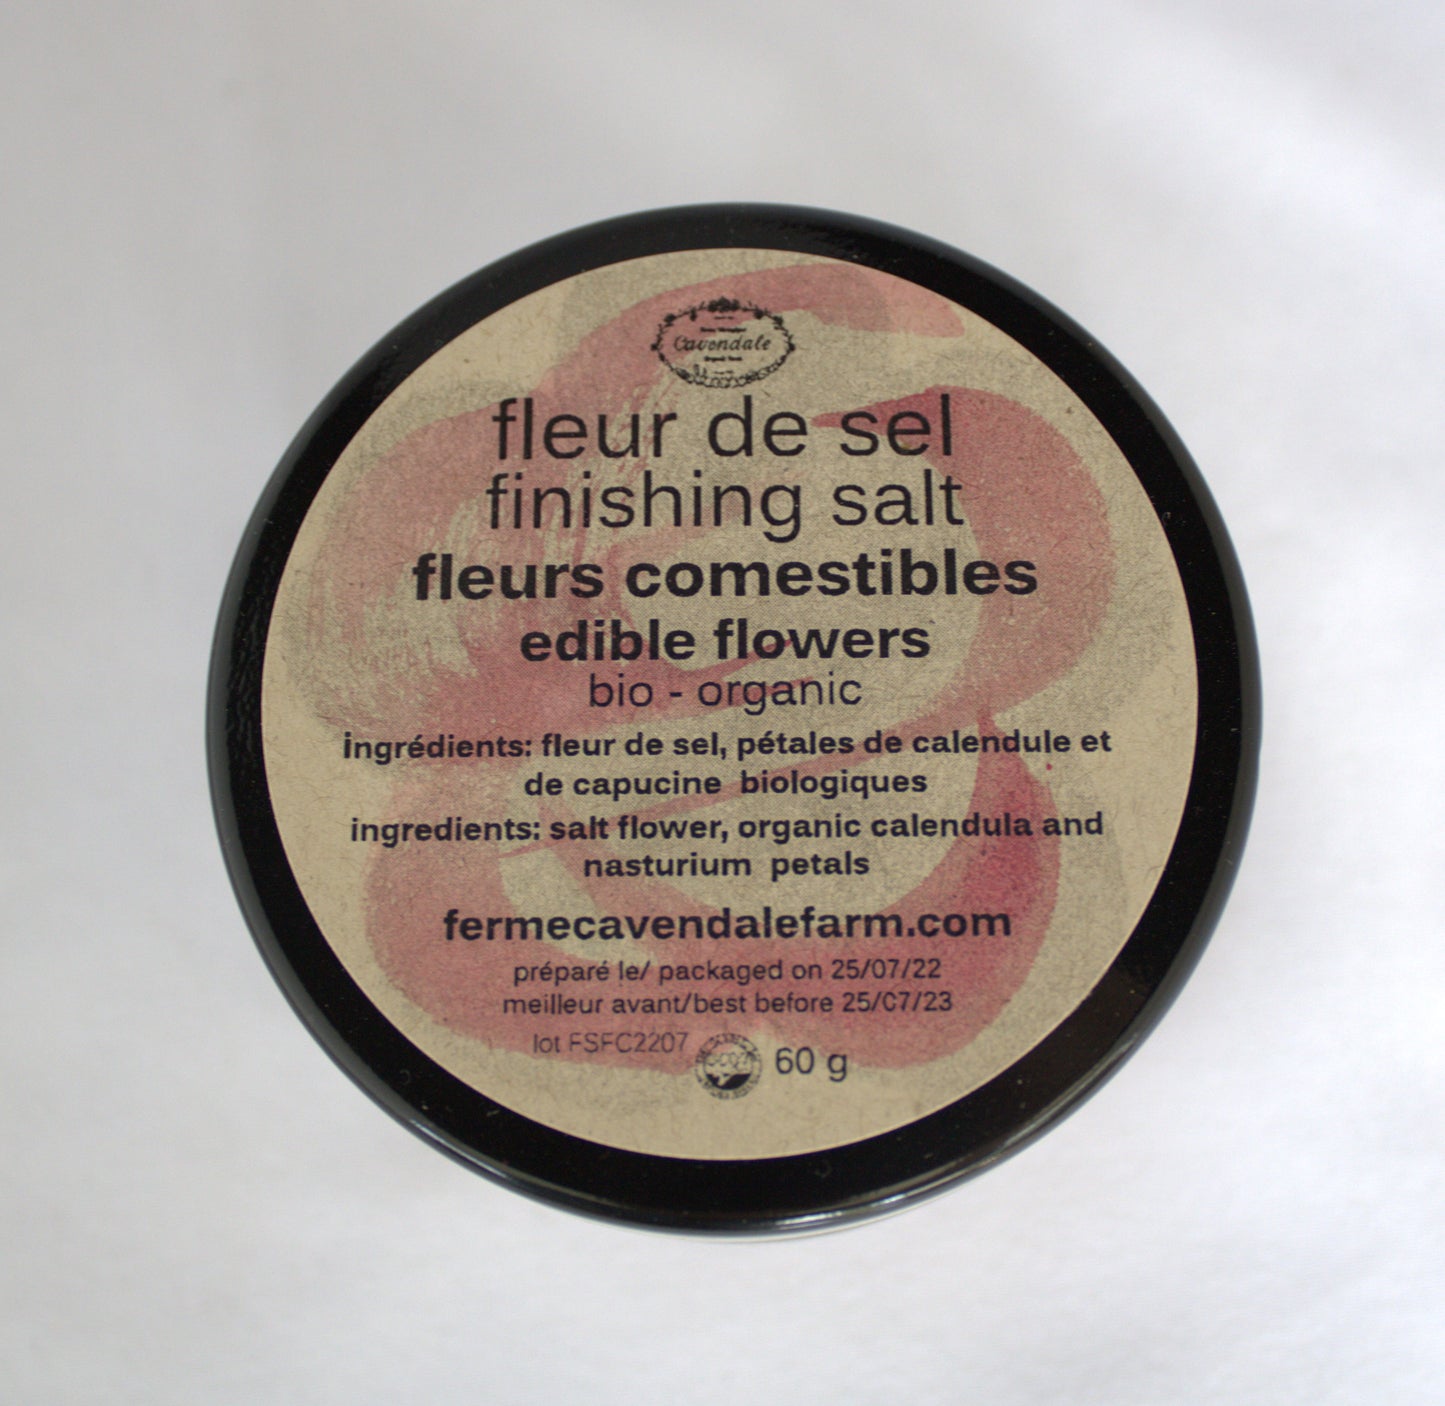 Finishing salt - edible flowers